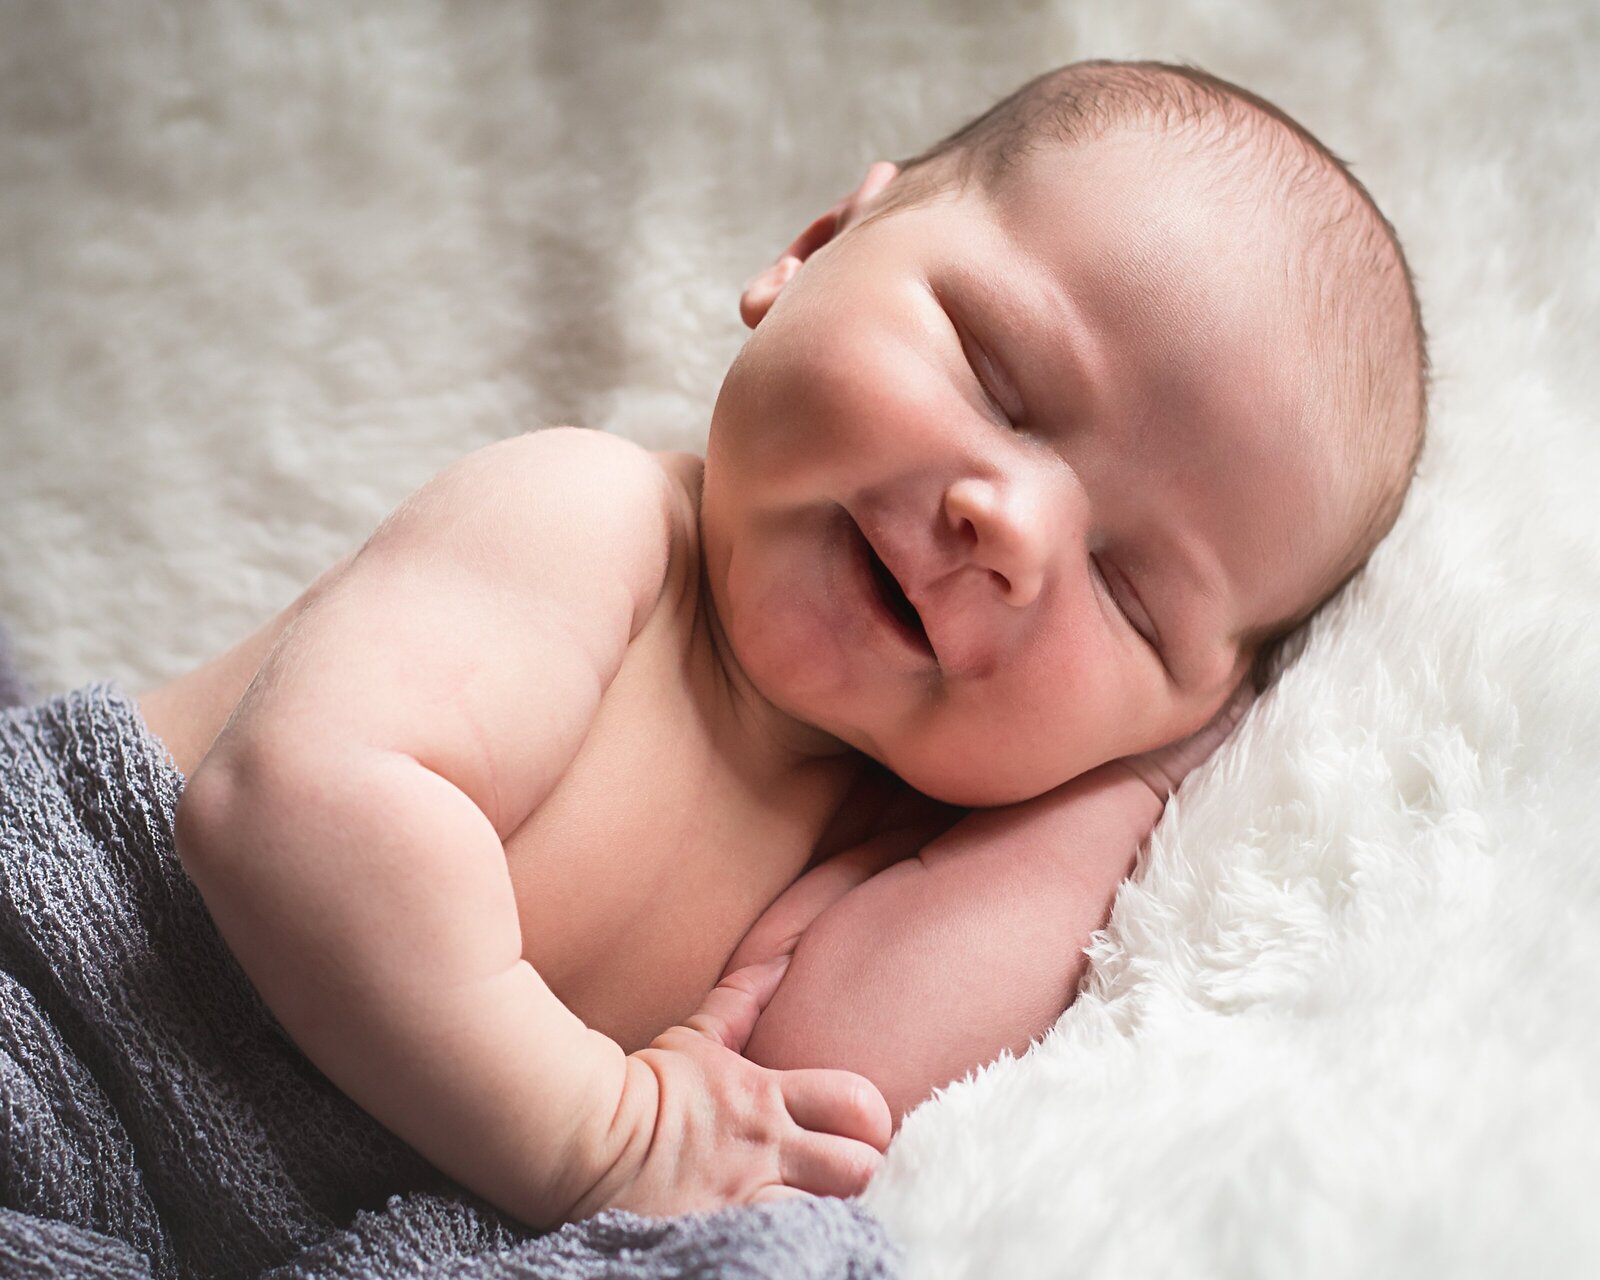 Newborn boy sleeping during in-home newborn photo session.